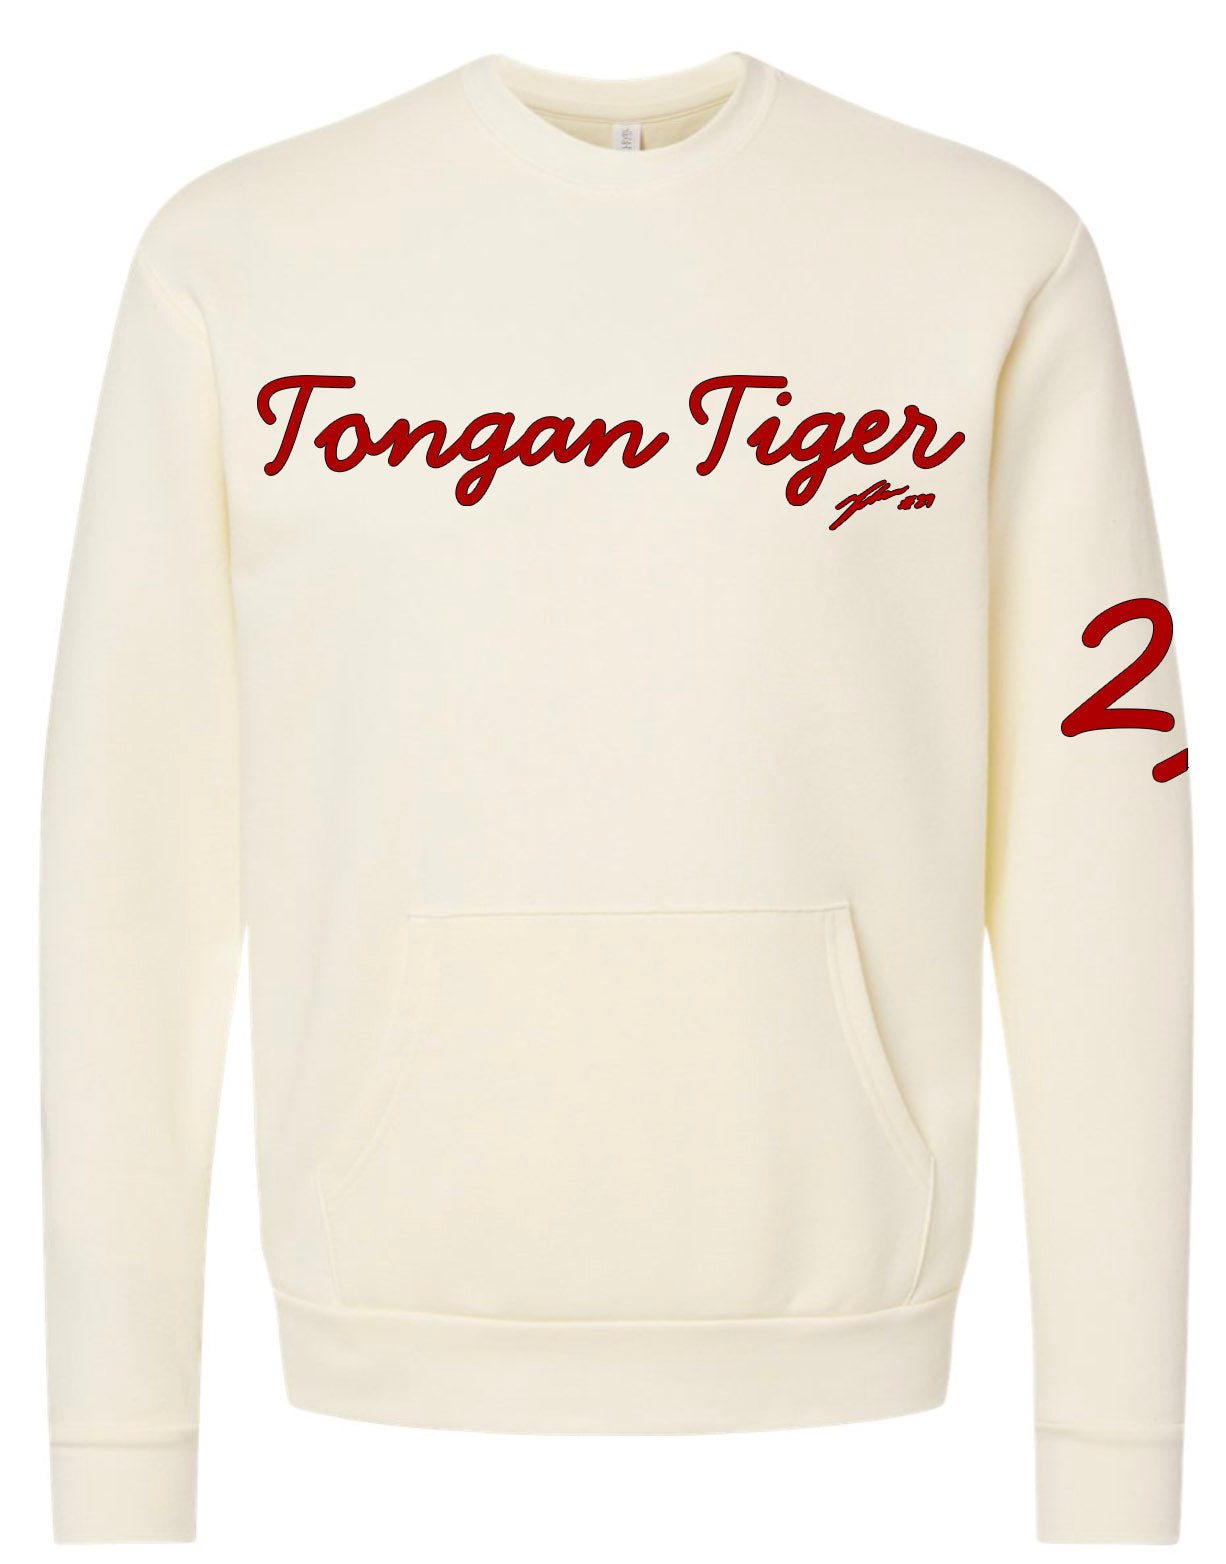 Tongan Tiger 29 Premium Sweatshirt